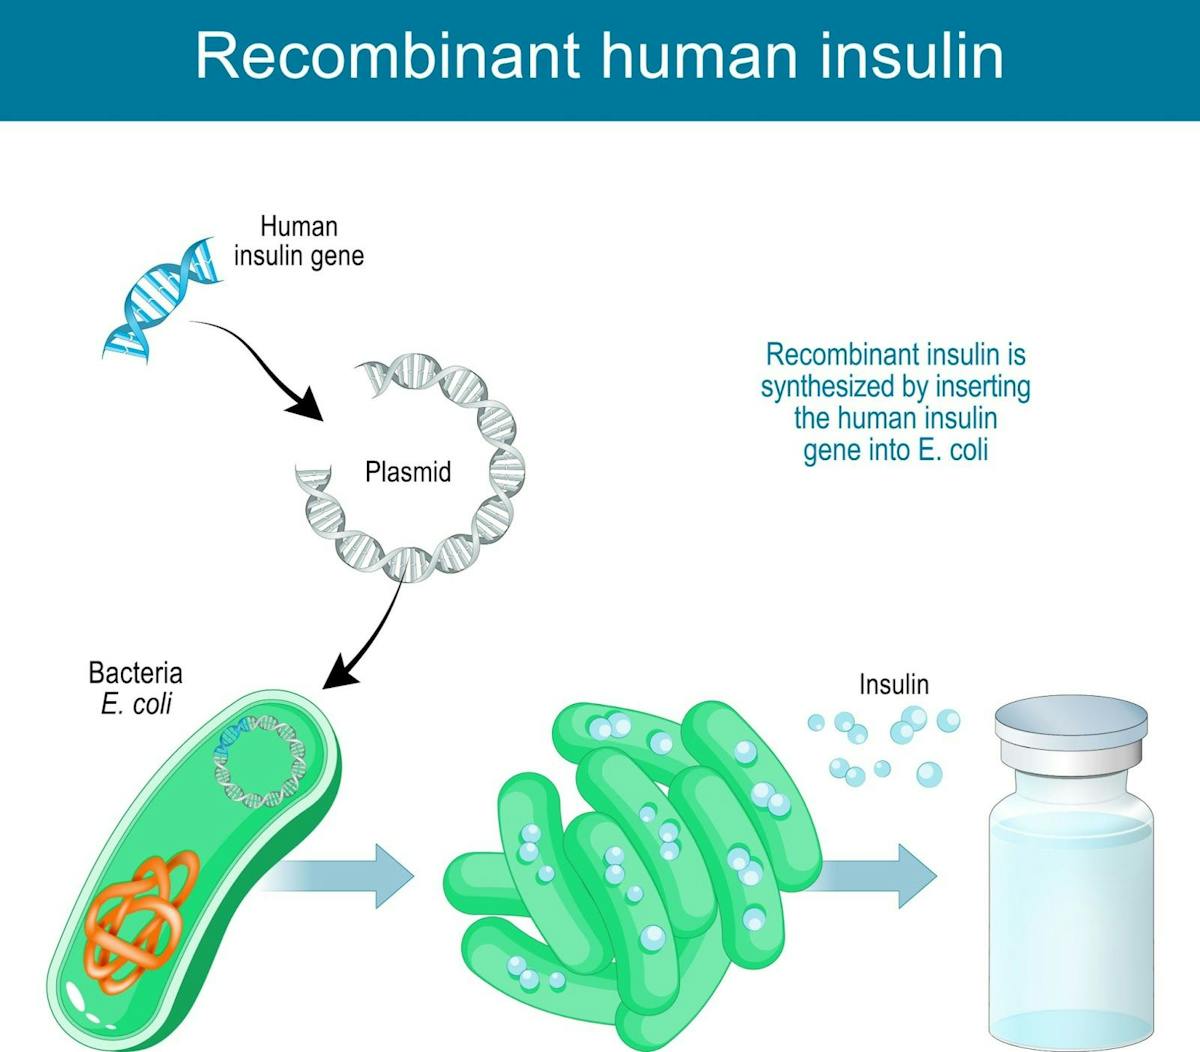 Recombinant human insulin